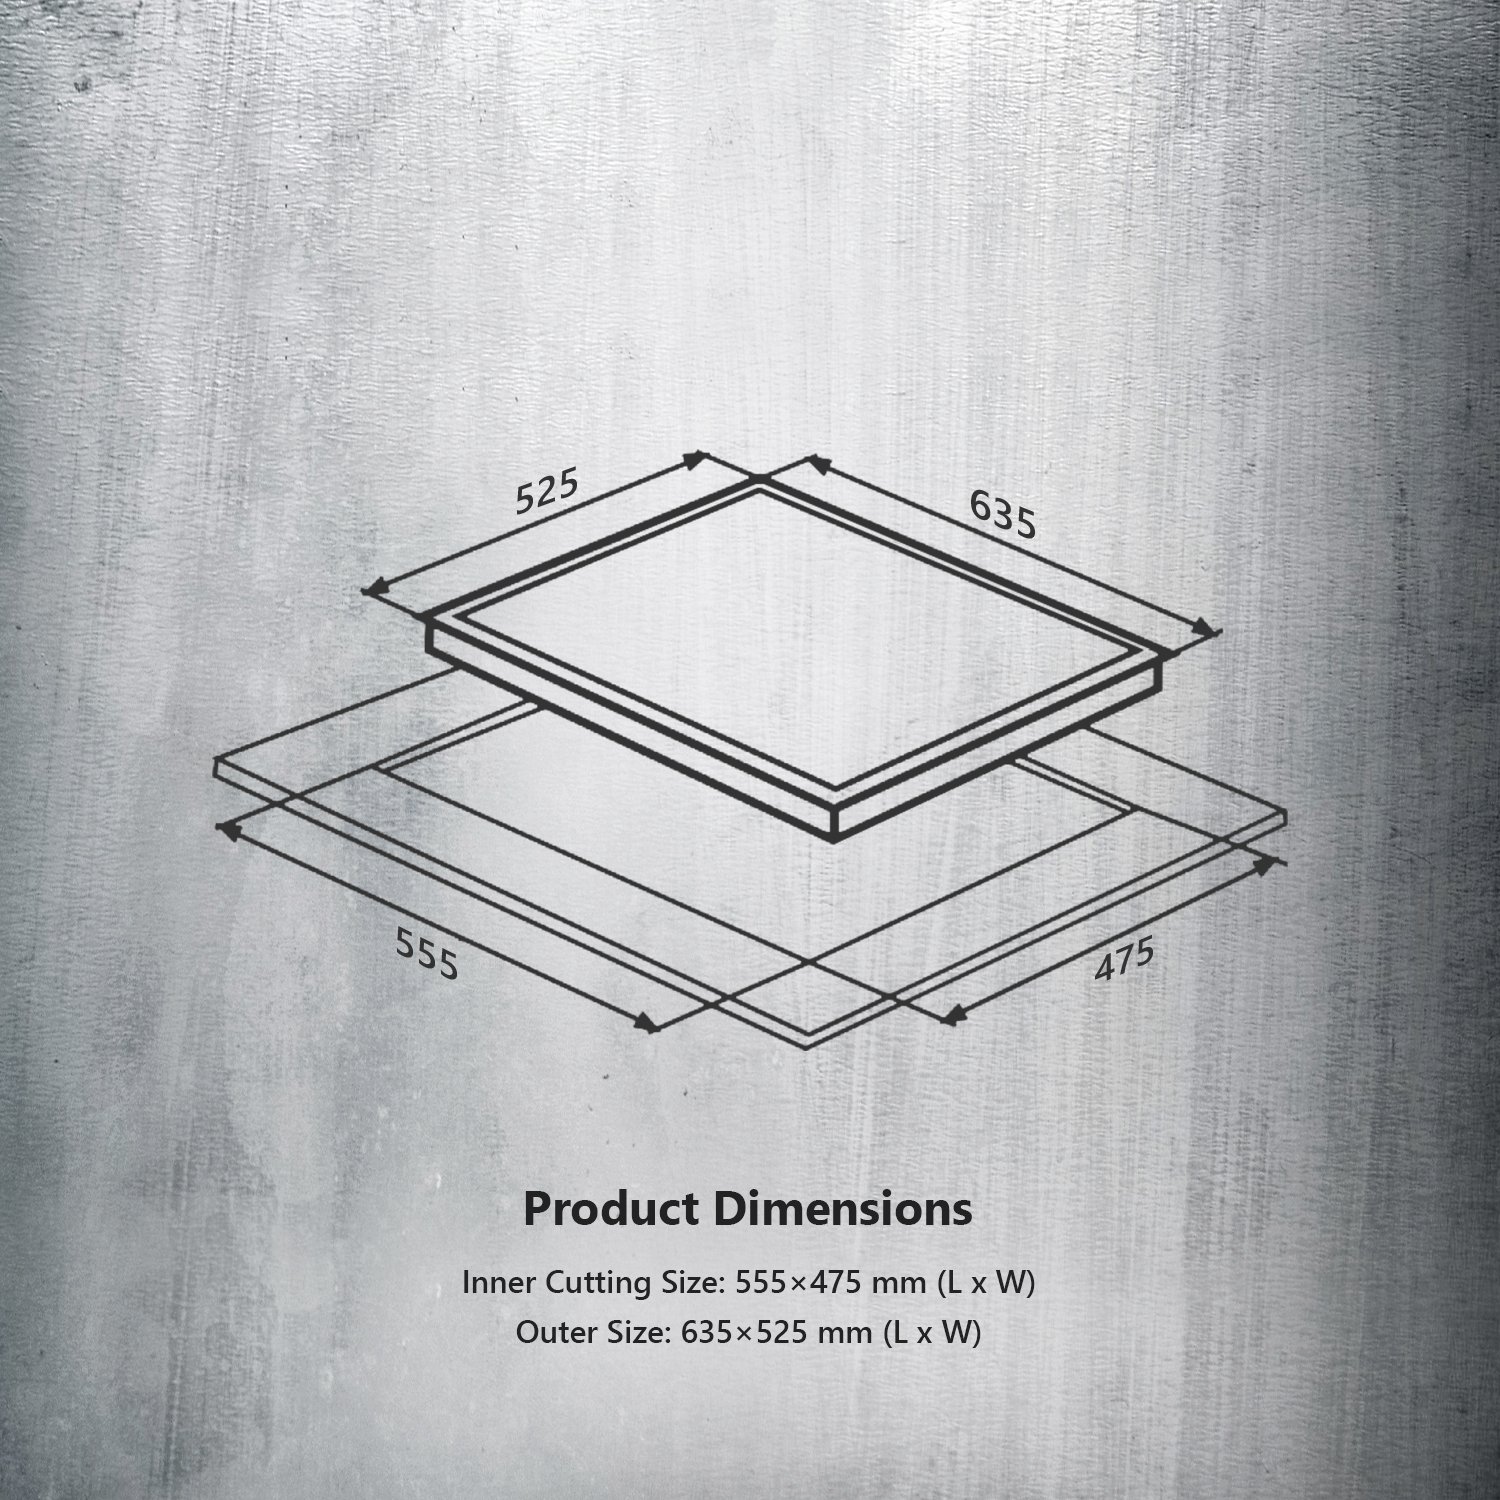 3 brass burner dimensions